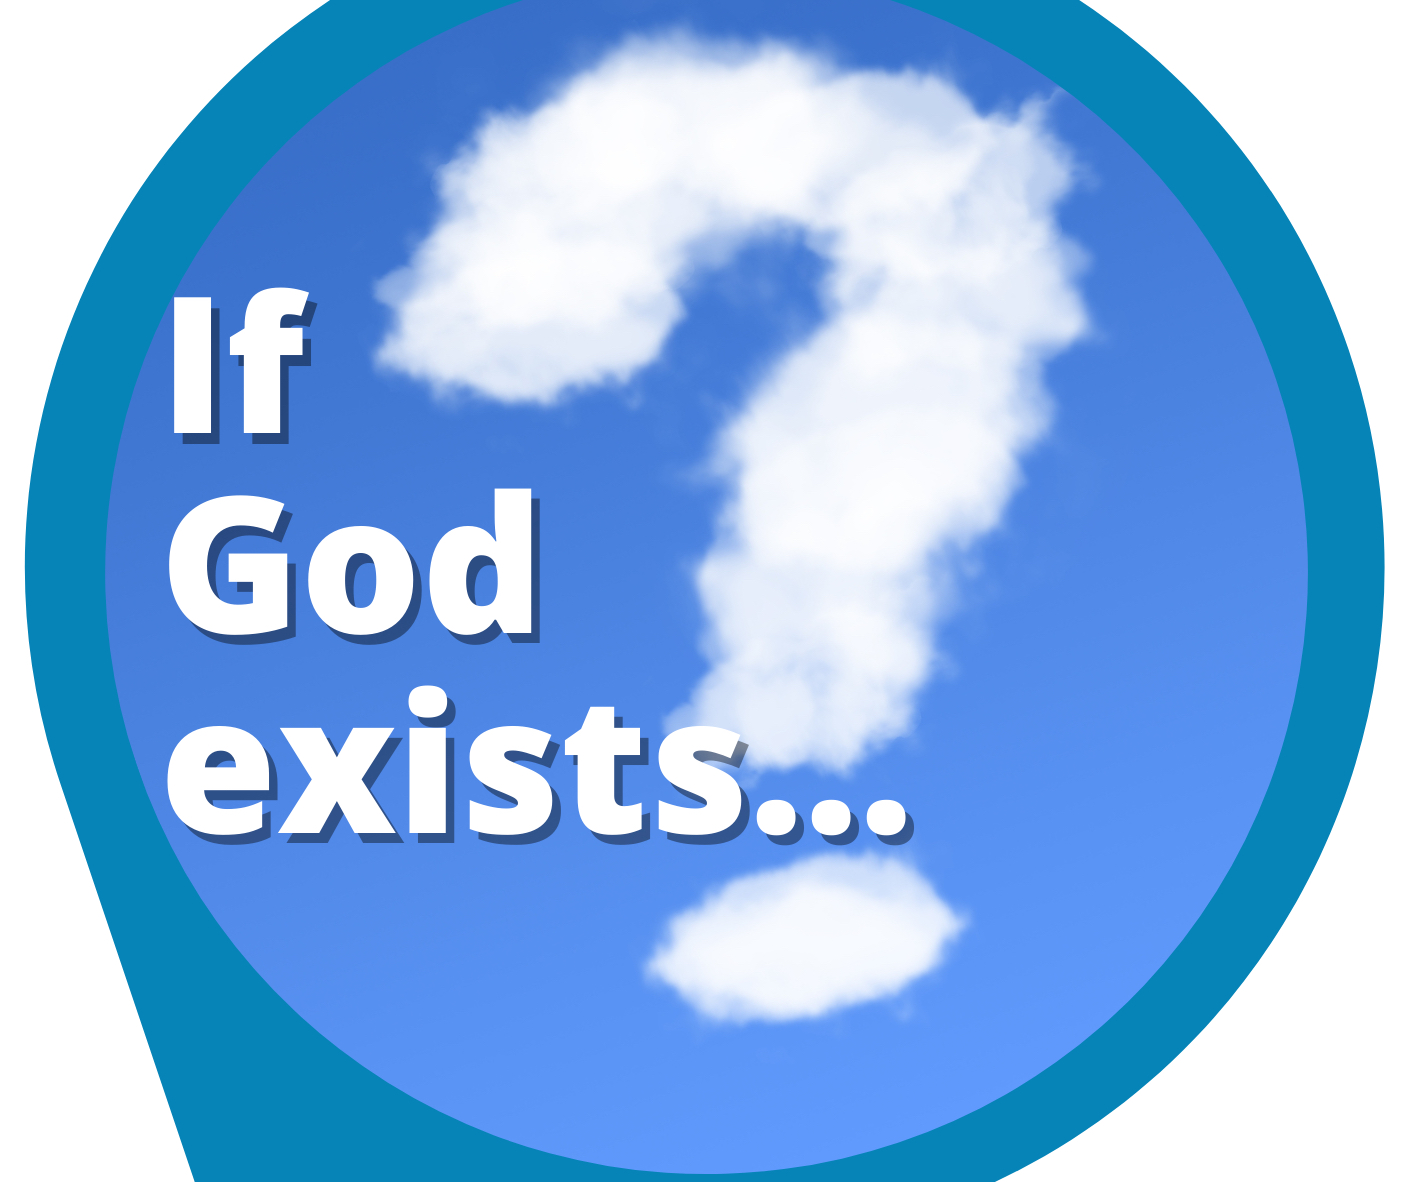 IMAGE If God exists...